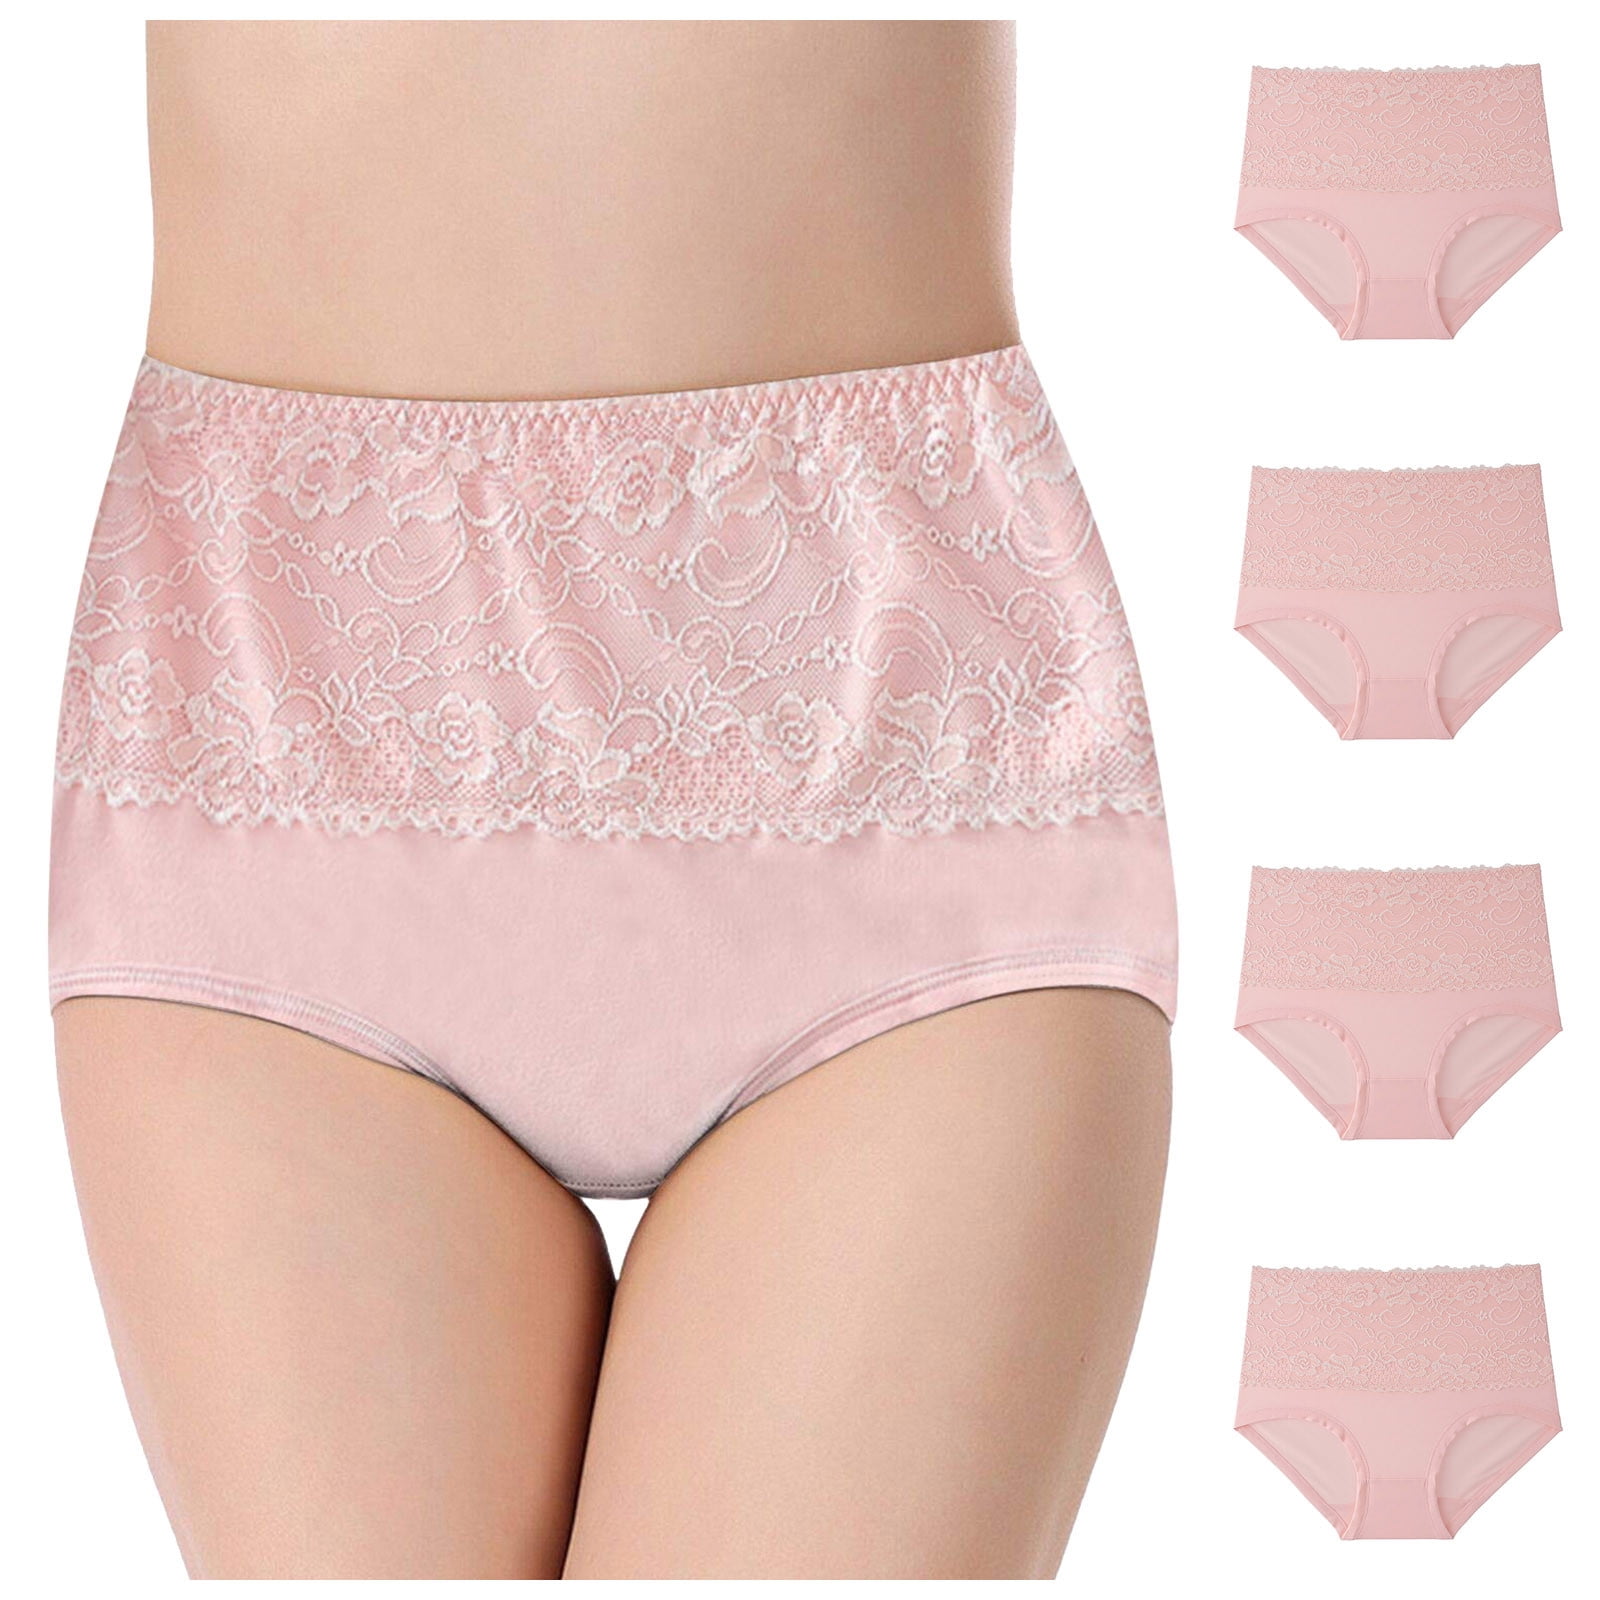 DORKASM Teen Girl Period Panties Seamless High Waisted Comfortable 4 Pack  Teen Girls Period Underwear Menstrual Period Panties Period Underwear Pink